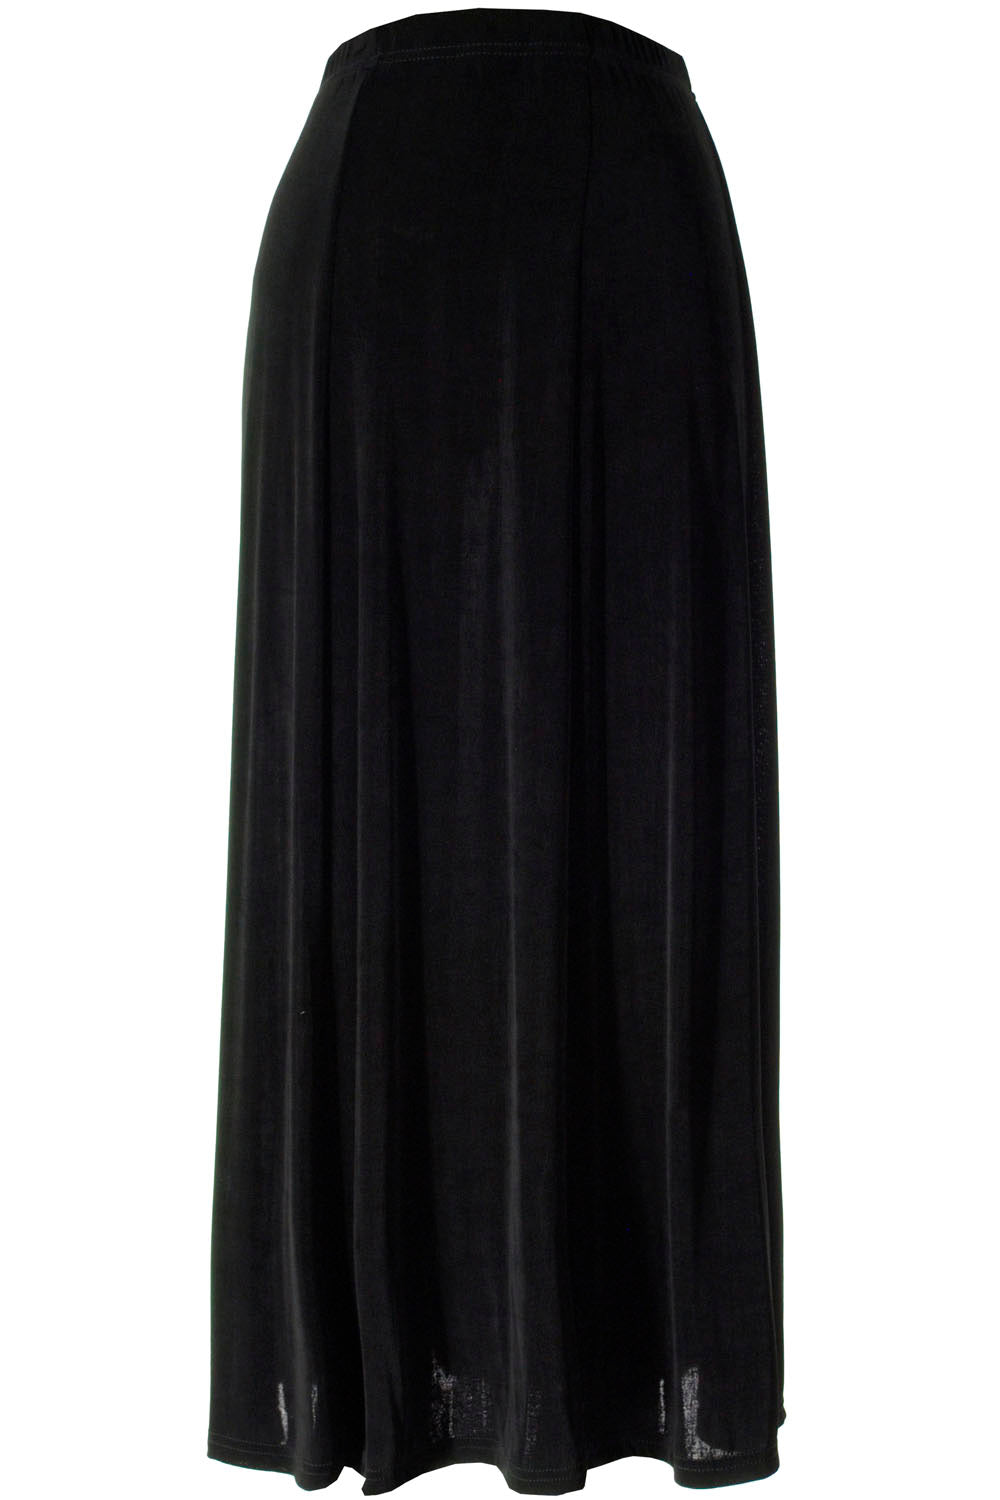 Jostar Non Iron Flared Skirt with Plus Sizes, 602AY-X - Jostar Online